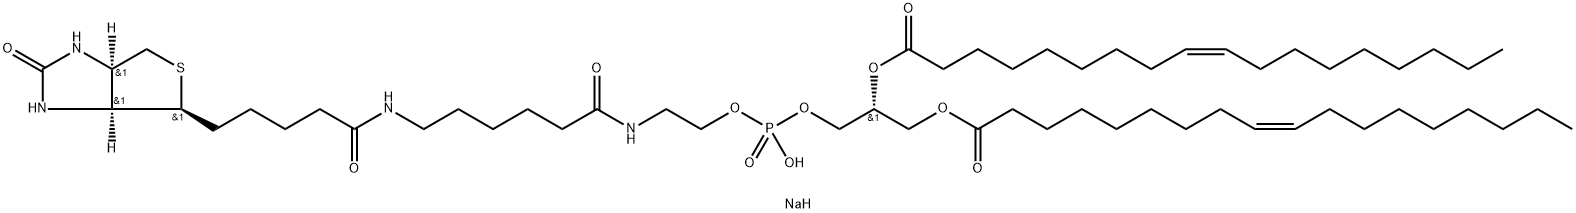 1,2-dioleoyl-sn-glycero-3-phosphoethanolaMine-N-(cap biotinyl) (sodiuM salt) Structure